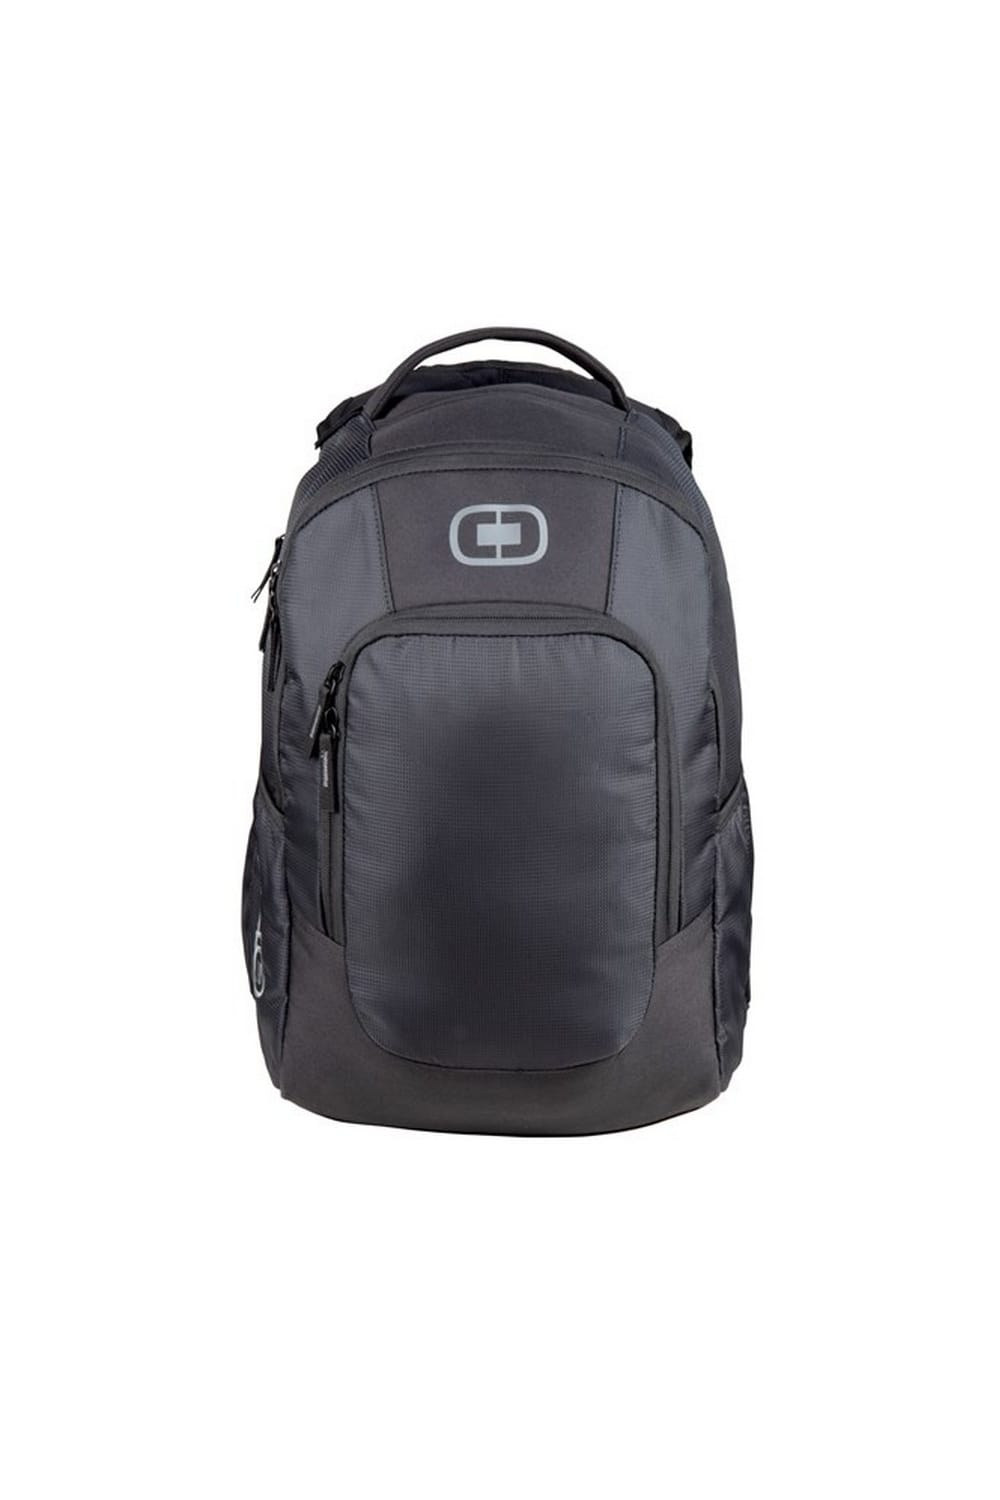 Ogio Logan Backpack (Black) (One Size)